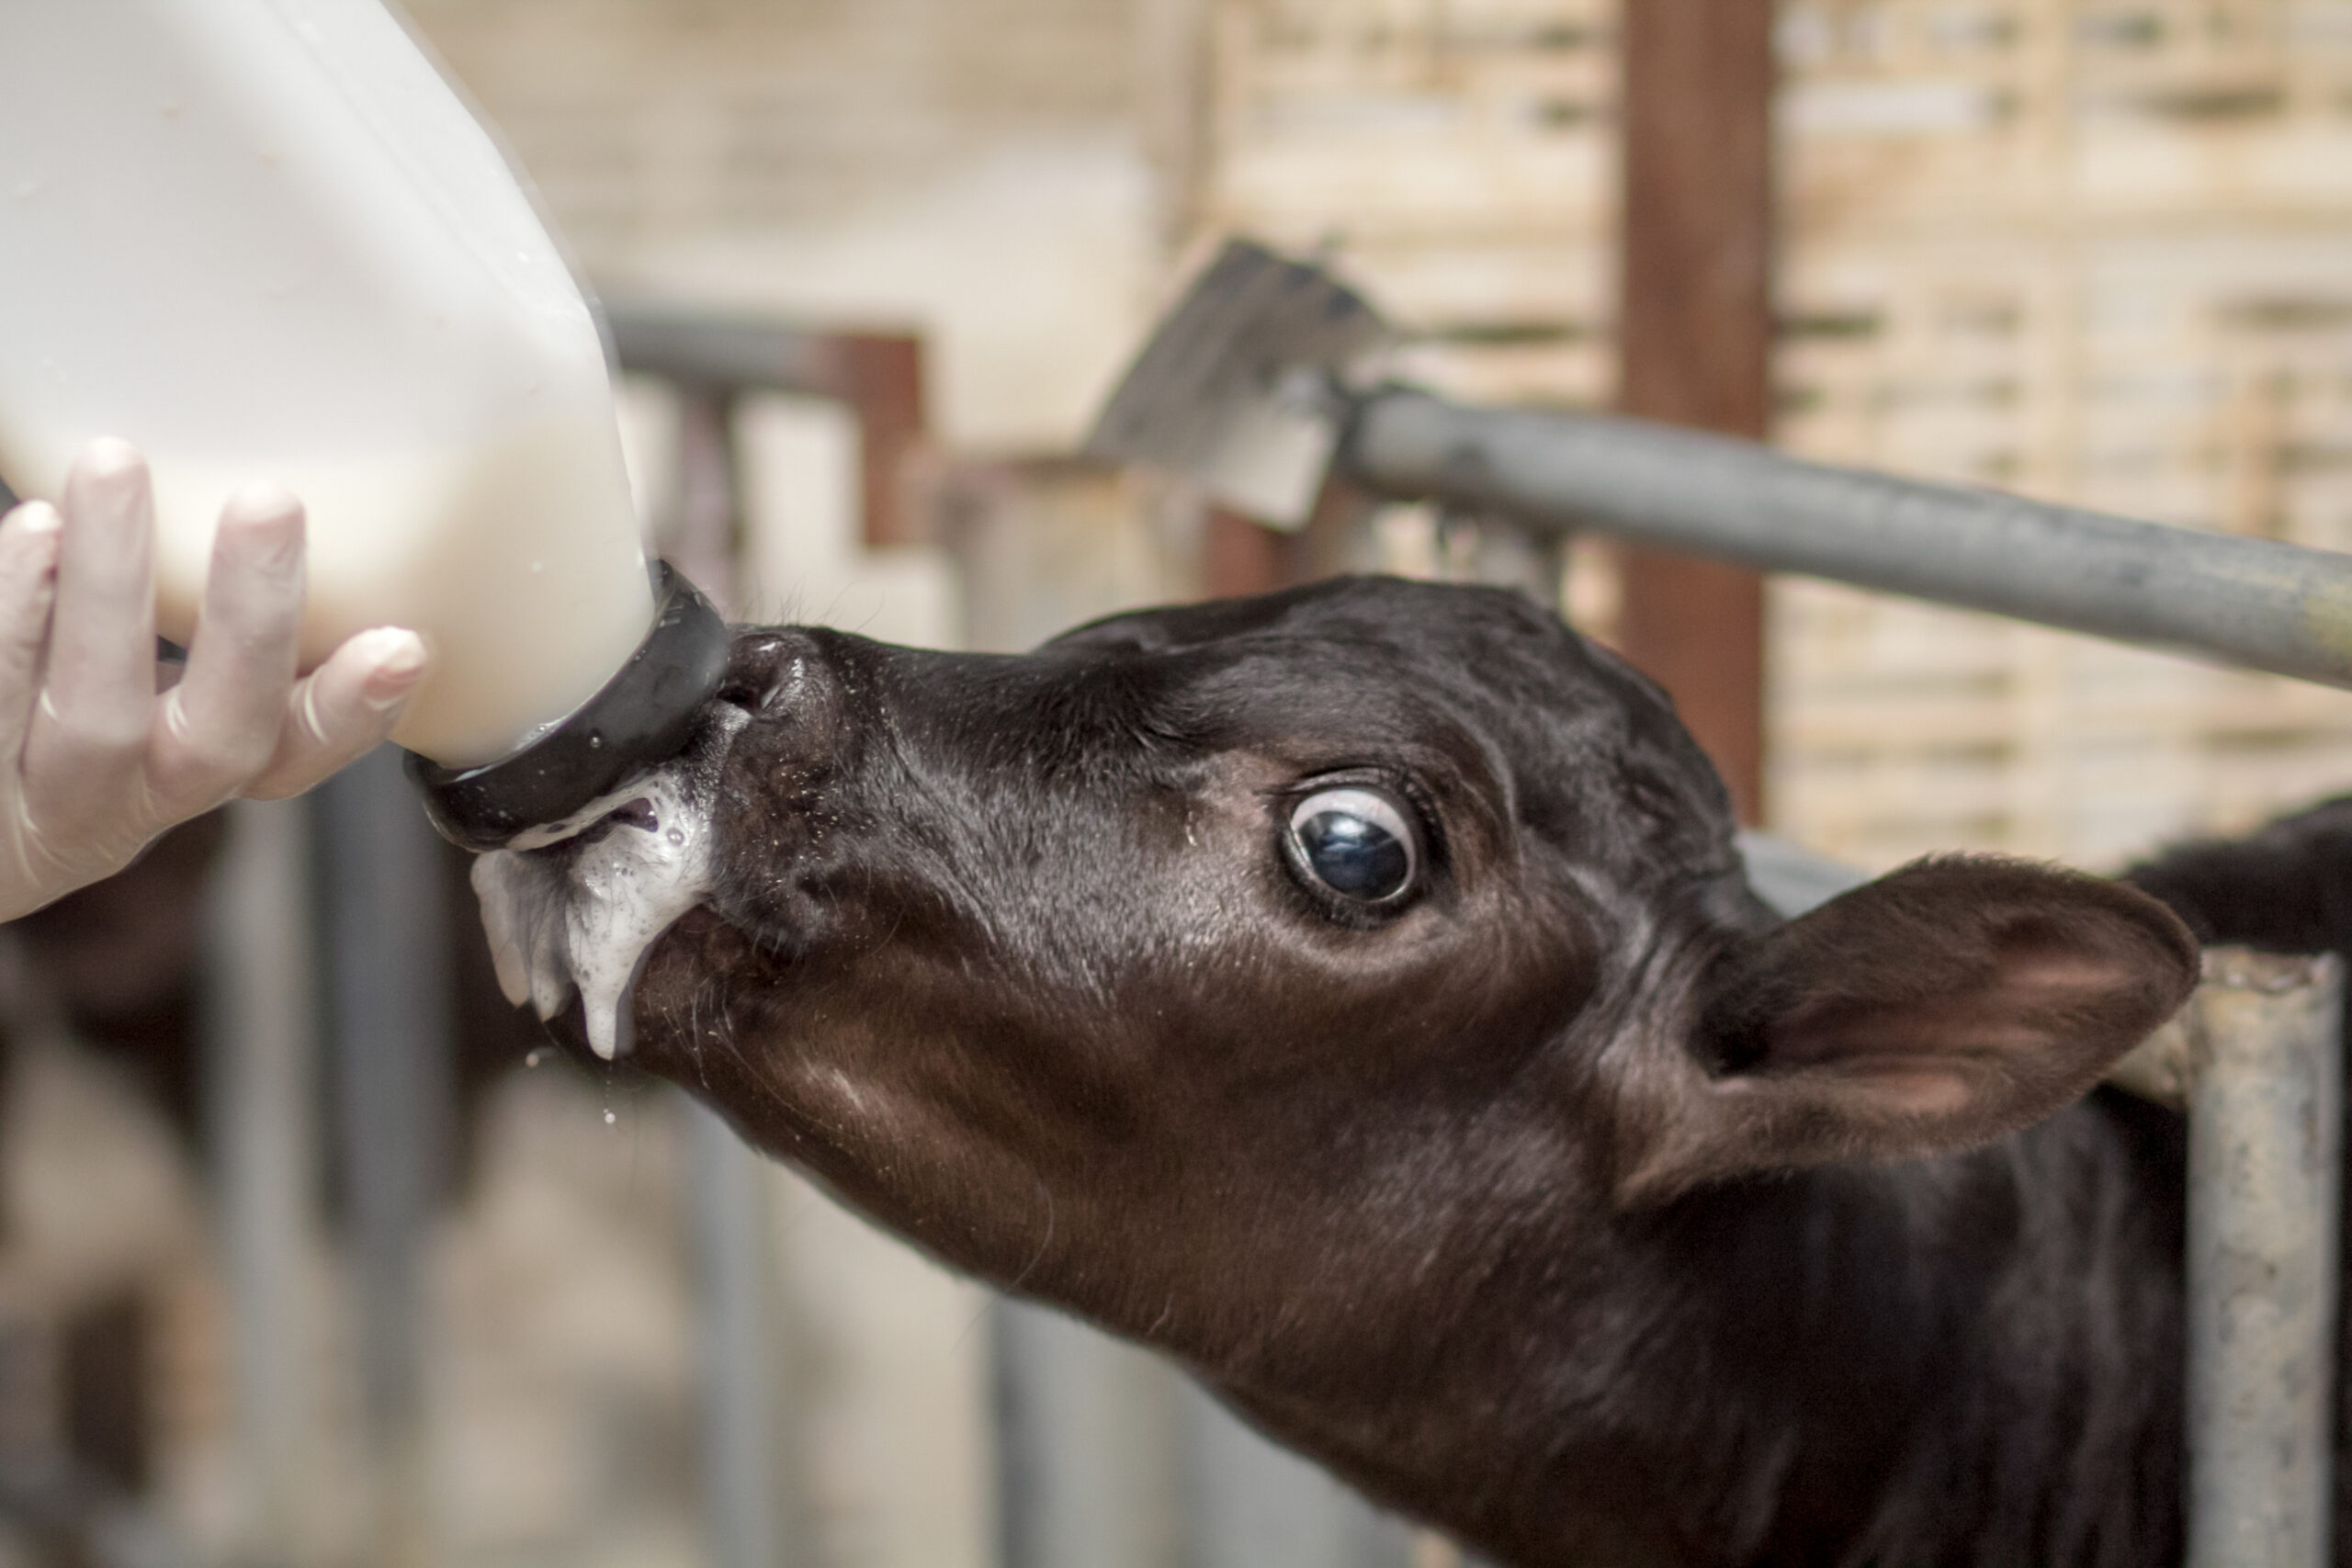 Holstein Calf Image